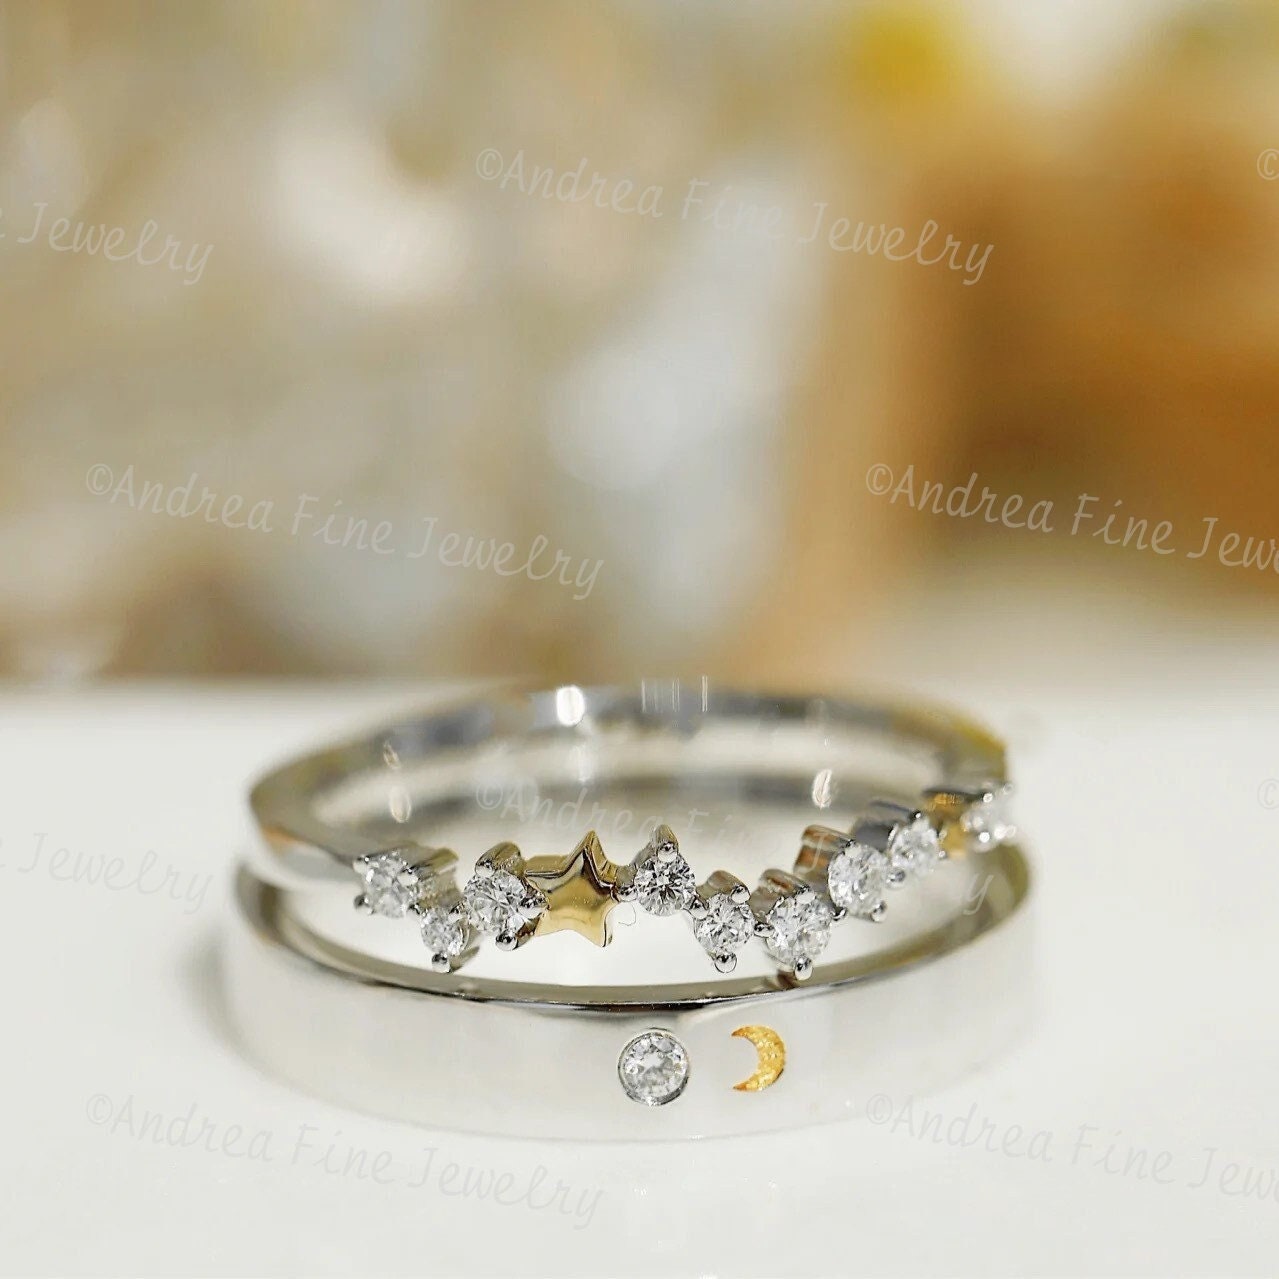 Precious Collection Forever Golden Couple Ring For Couple (Silver & Gold)